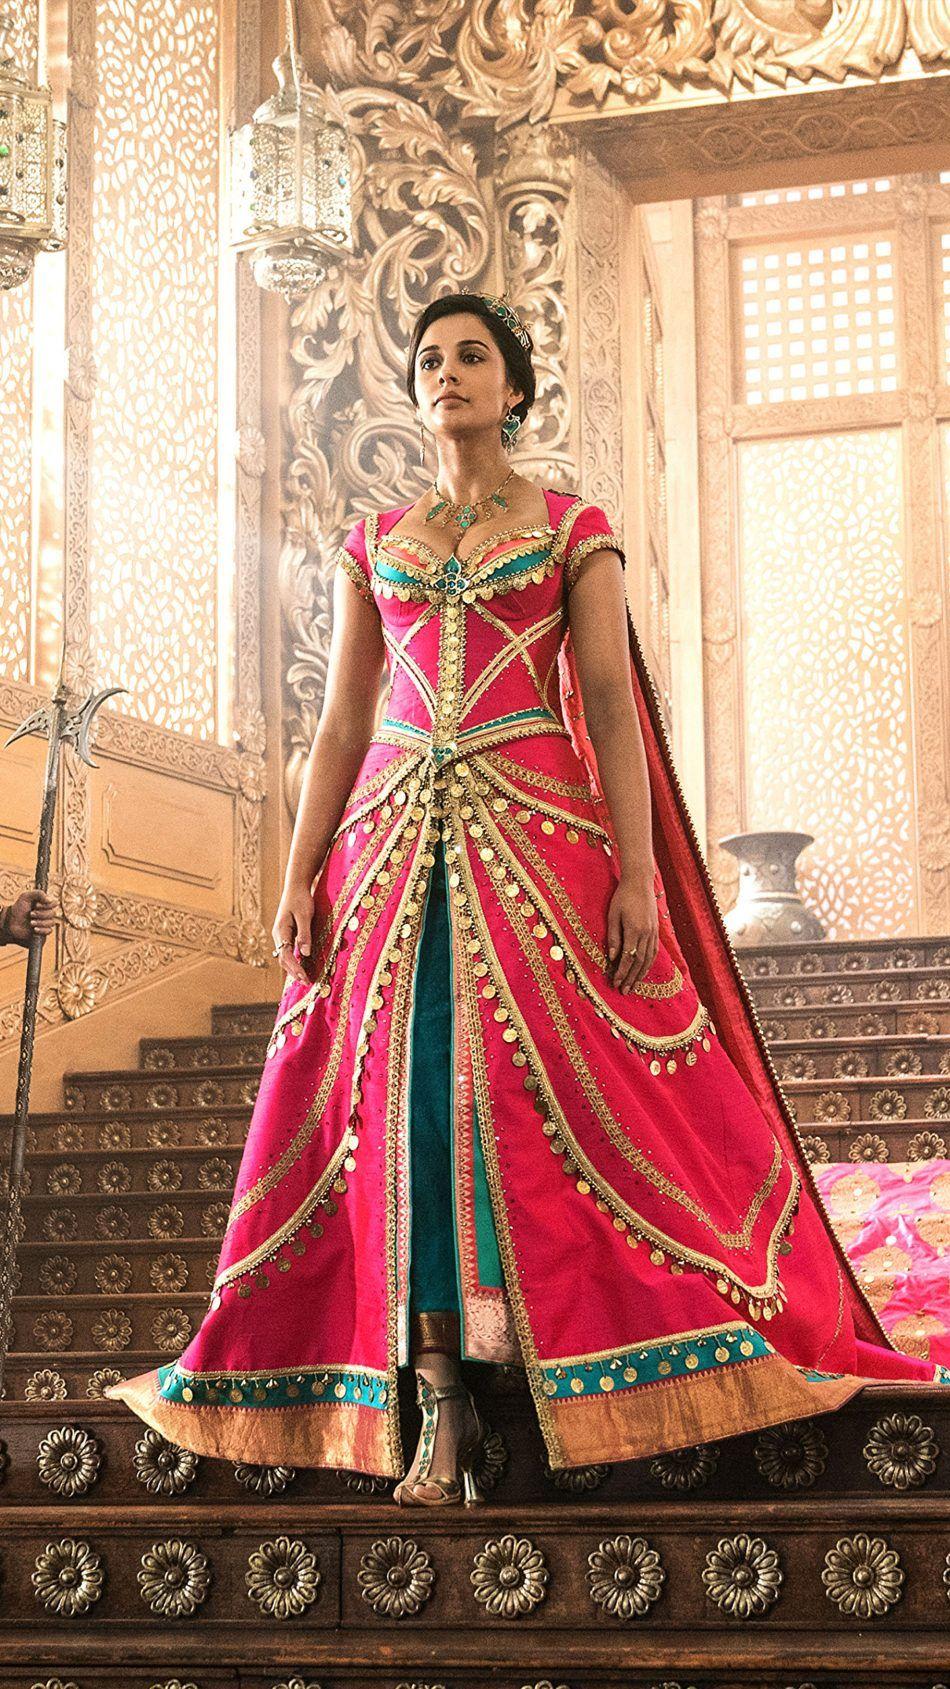 Princess Jasmine In Aladdin (Naomi Scott). Movie Wallpaper